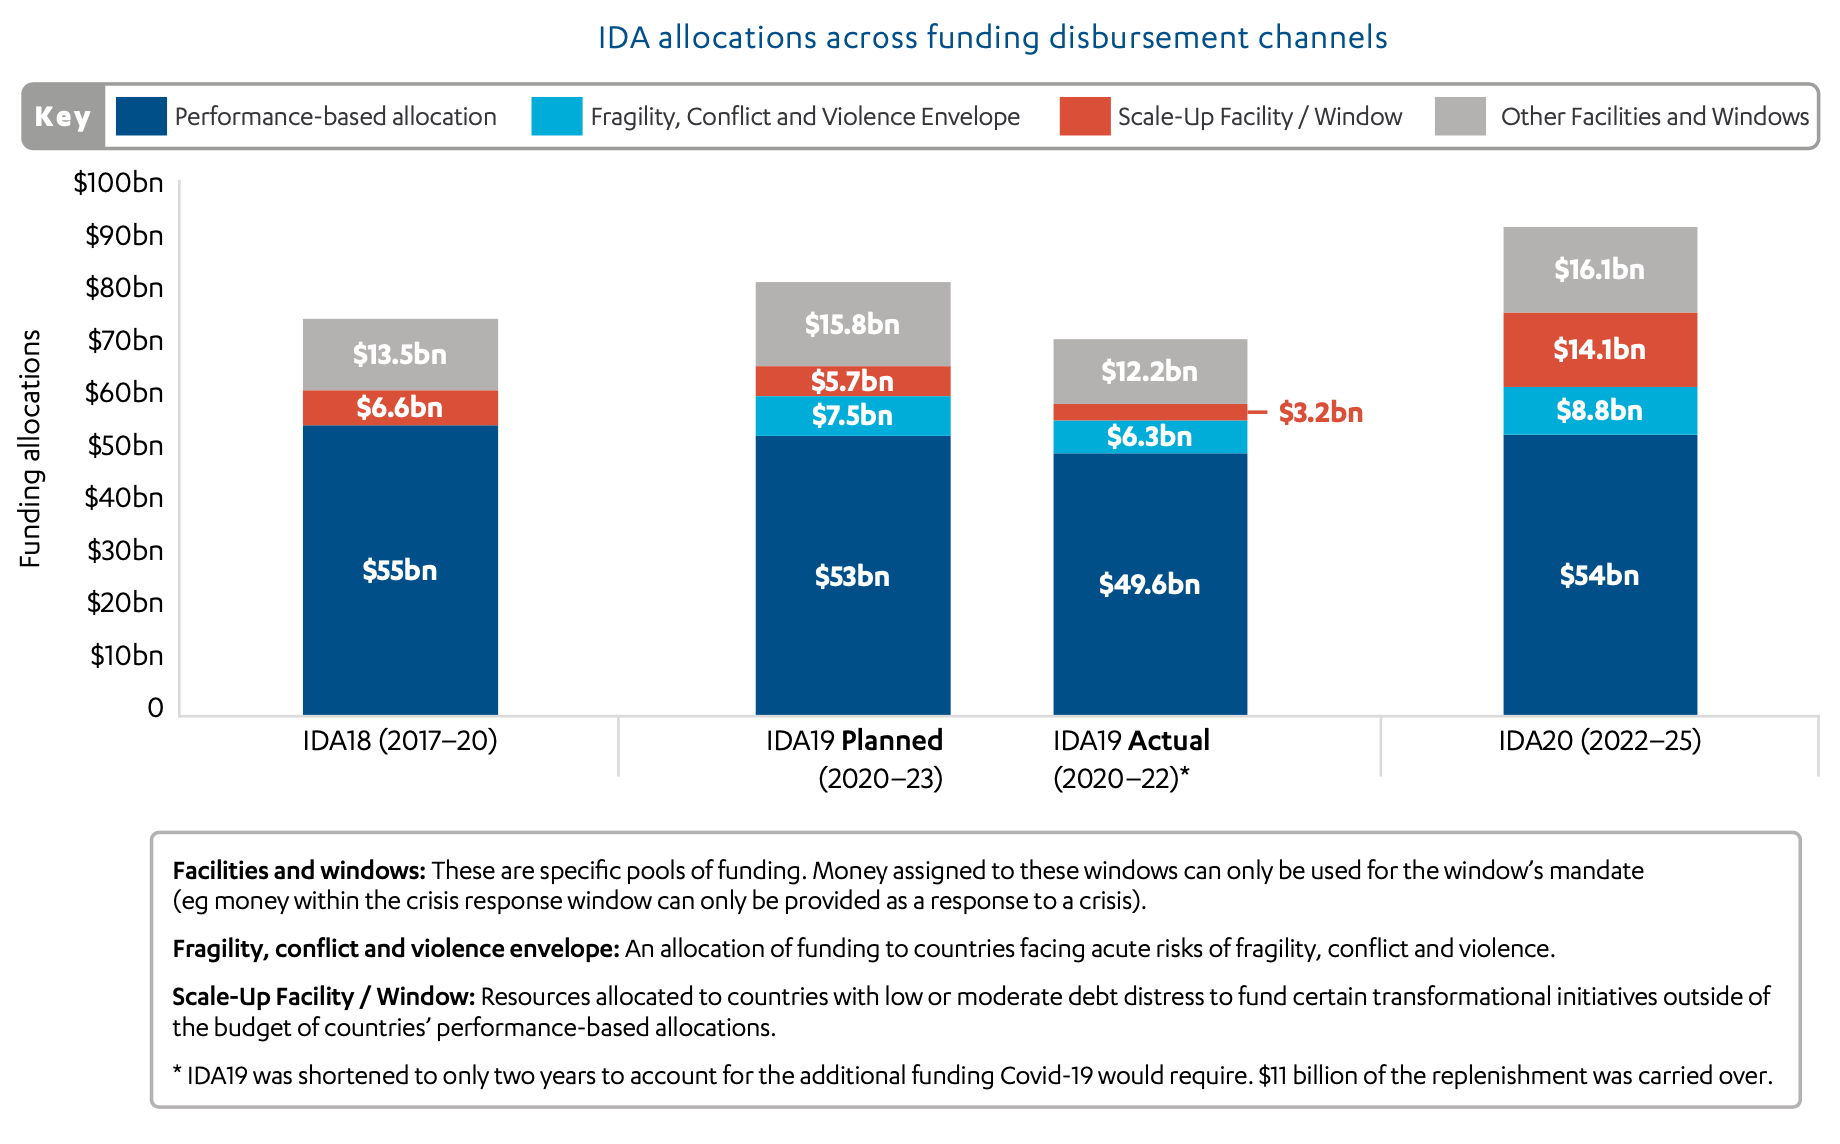 Figure 3: IDA allocations across funding disbursement channels